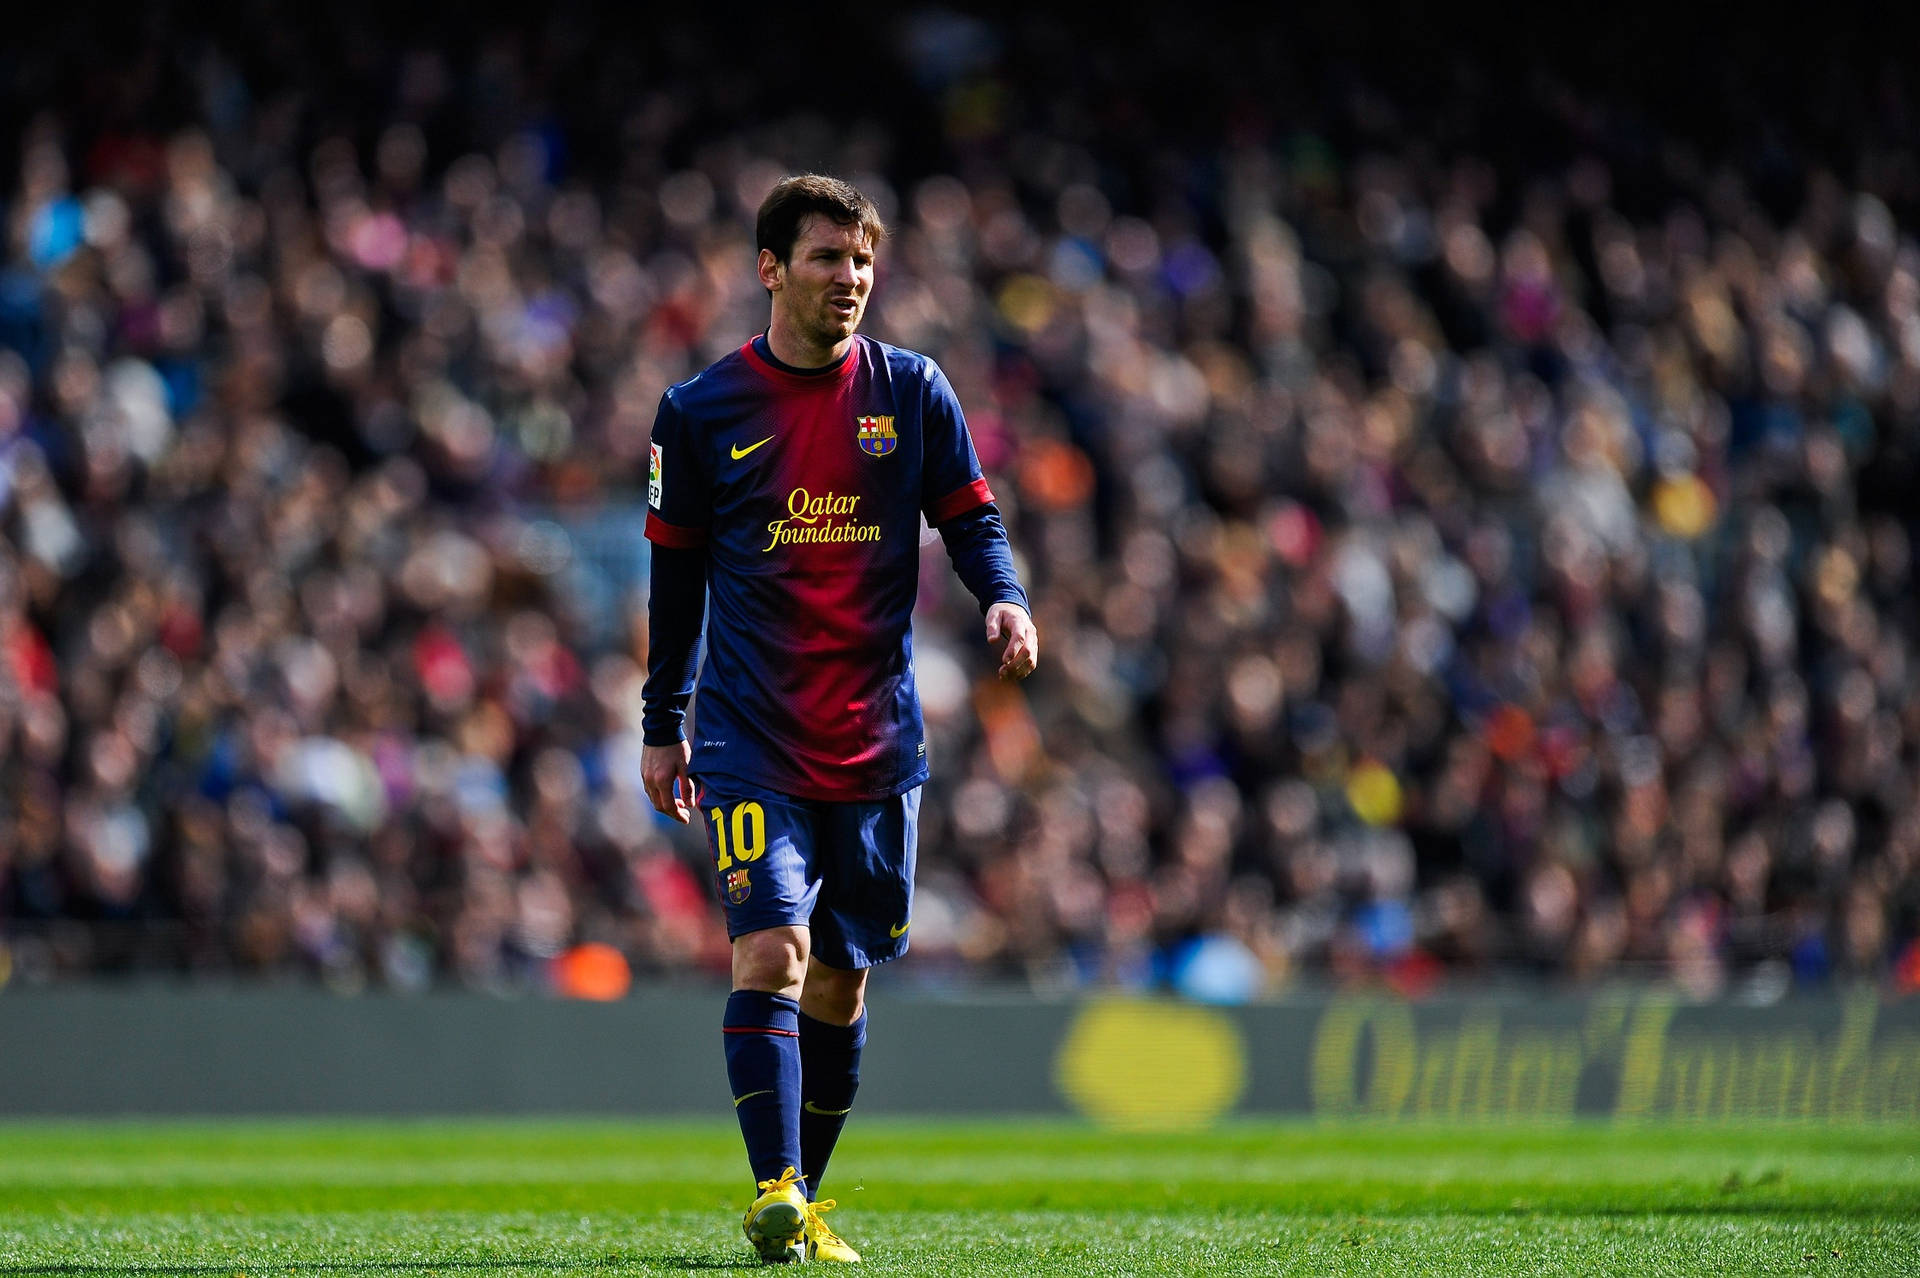 Massivpublik Lionel Messi. Wallpaper